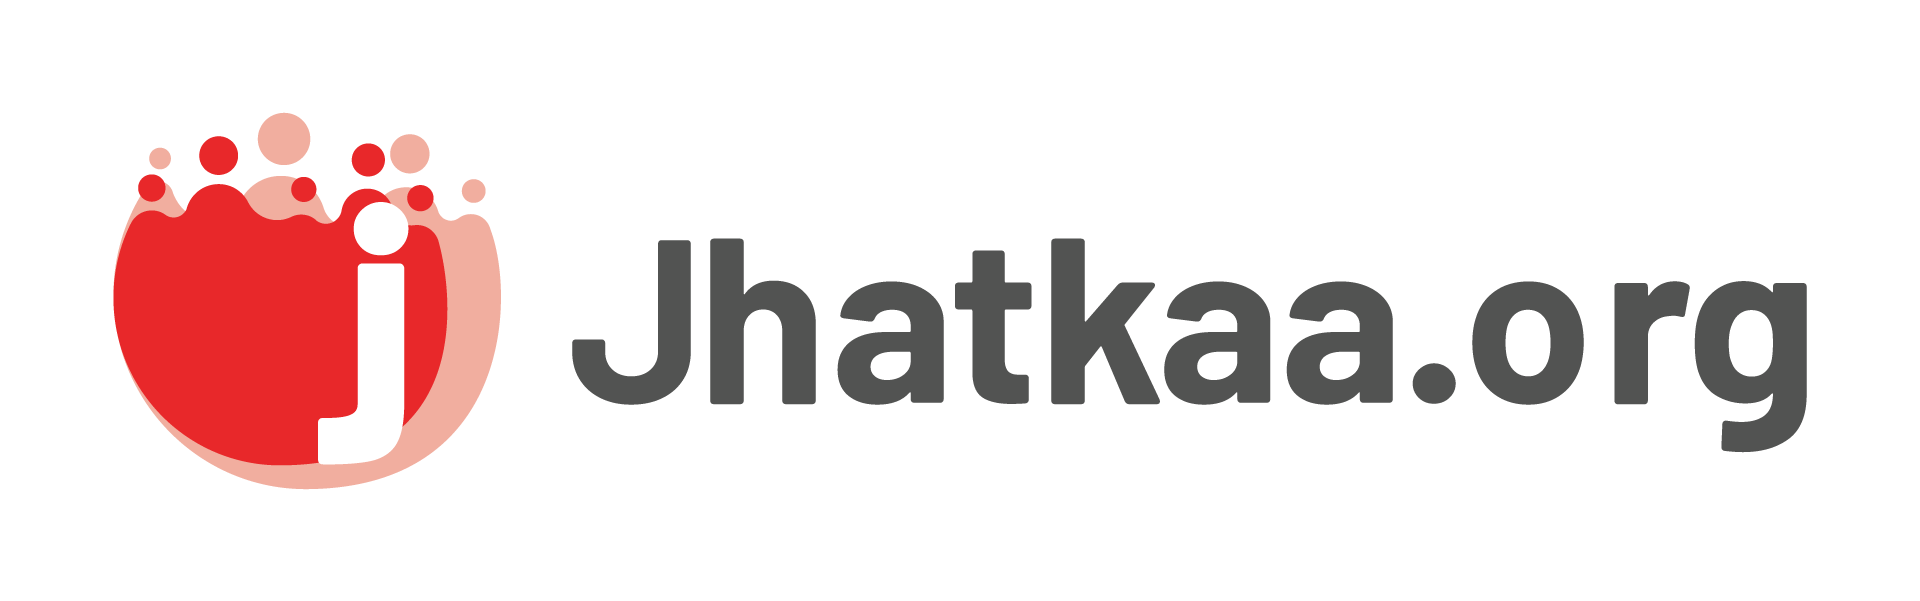 Jhatkaa.org Home Page